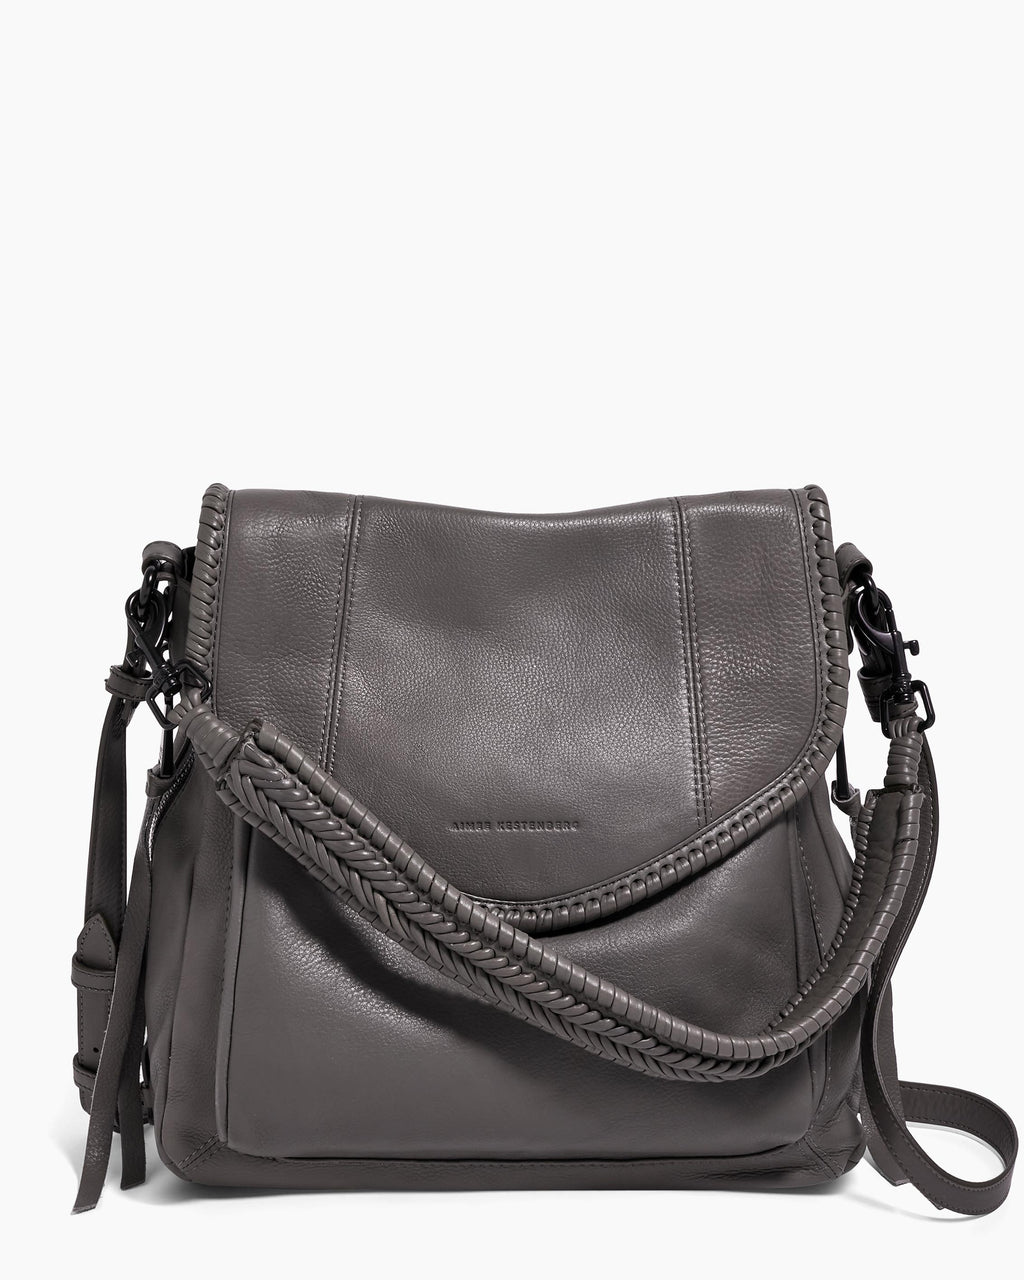 Aimee Kestenberg No BS Leather Backpack in Chestnut